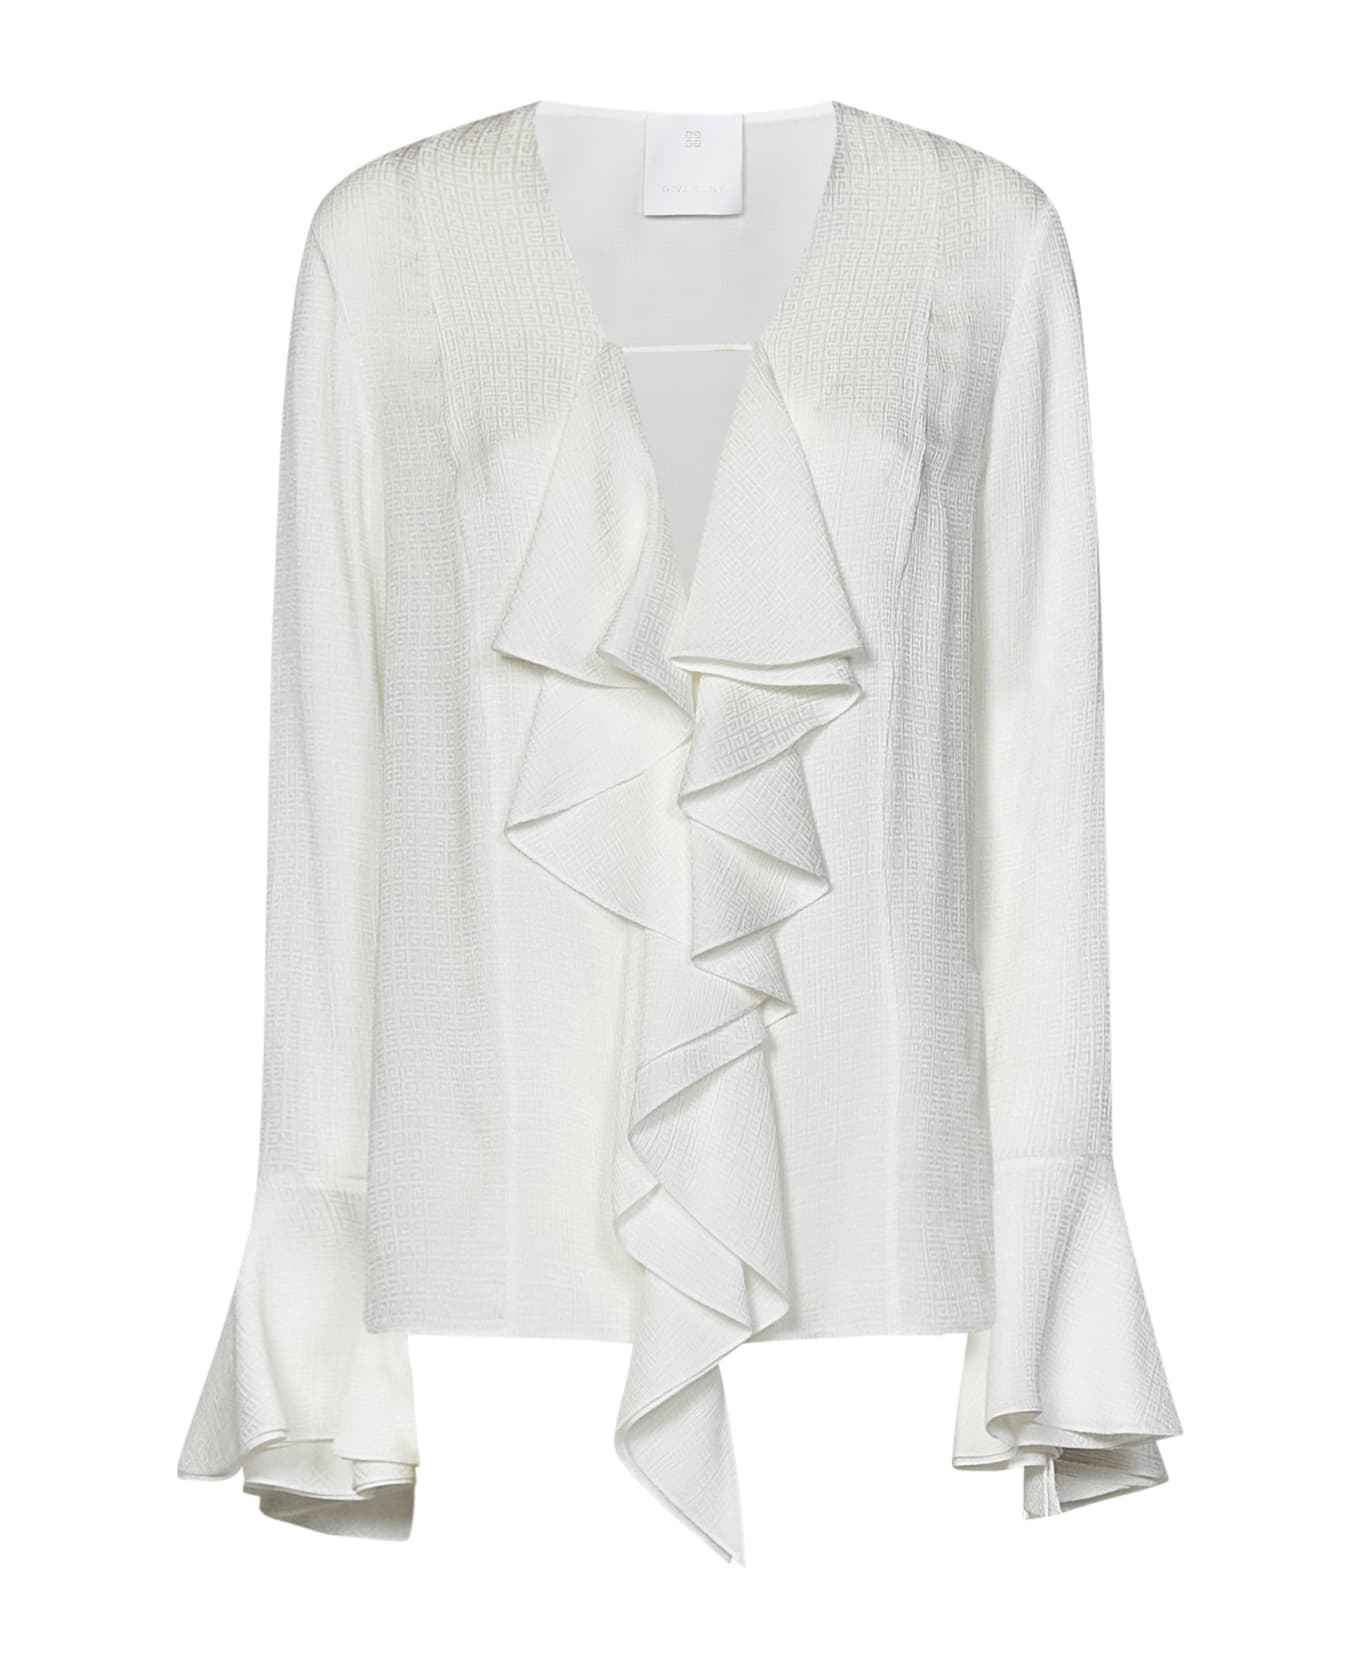 Givenchy 4g Shirt - White ブラウス